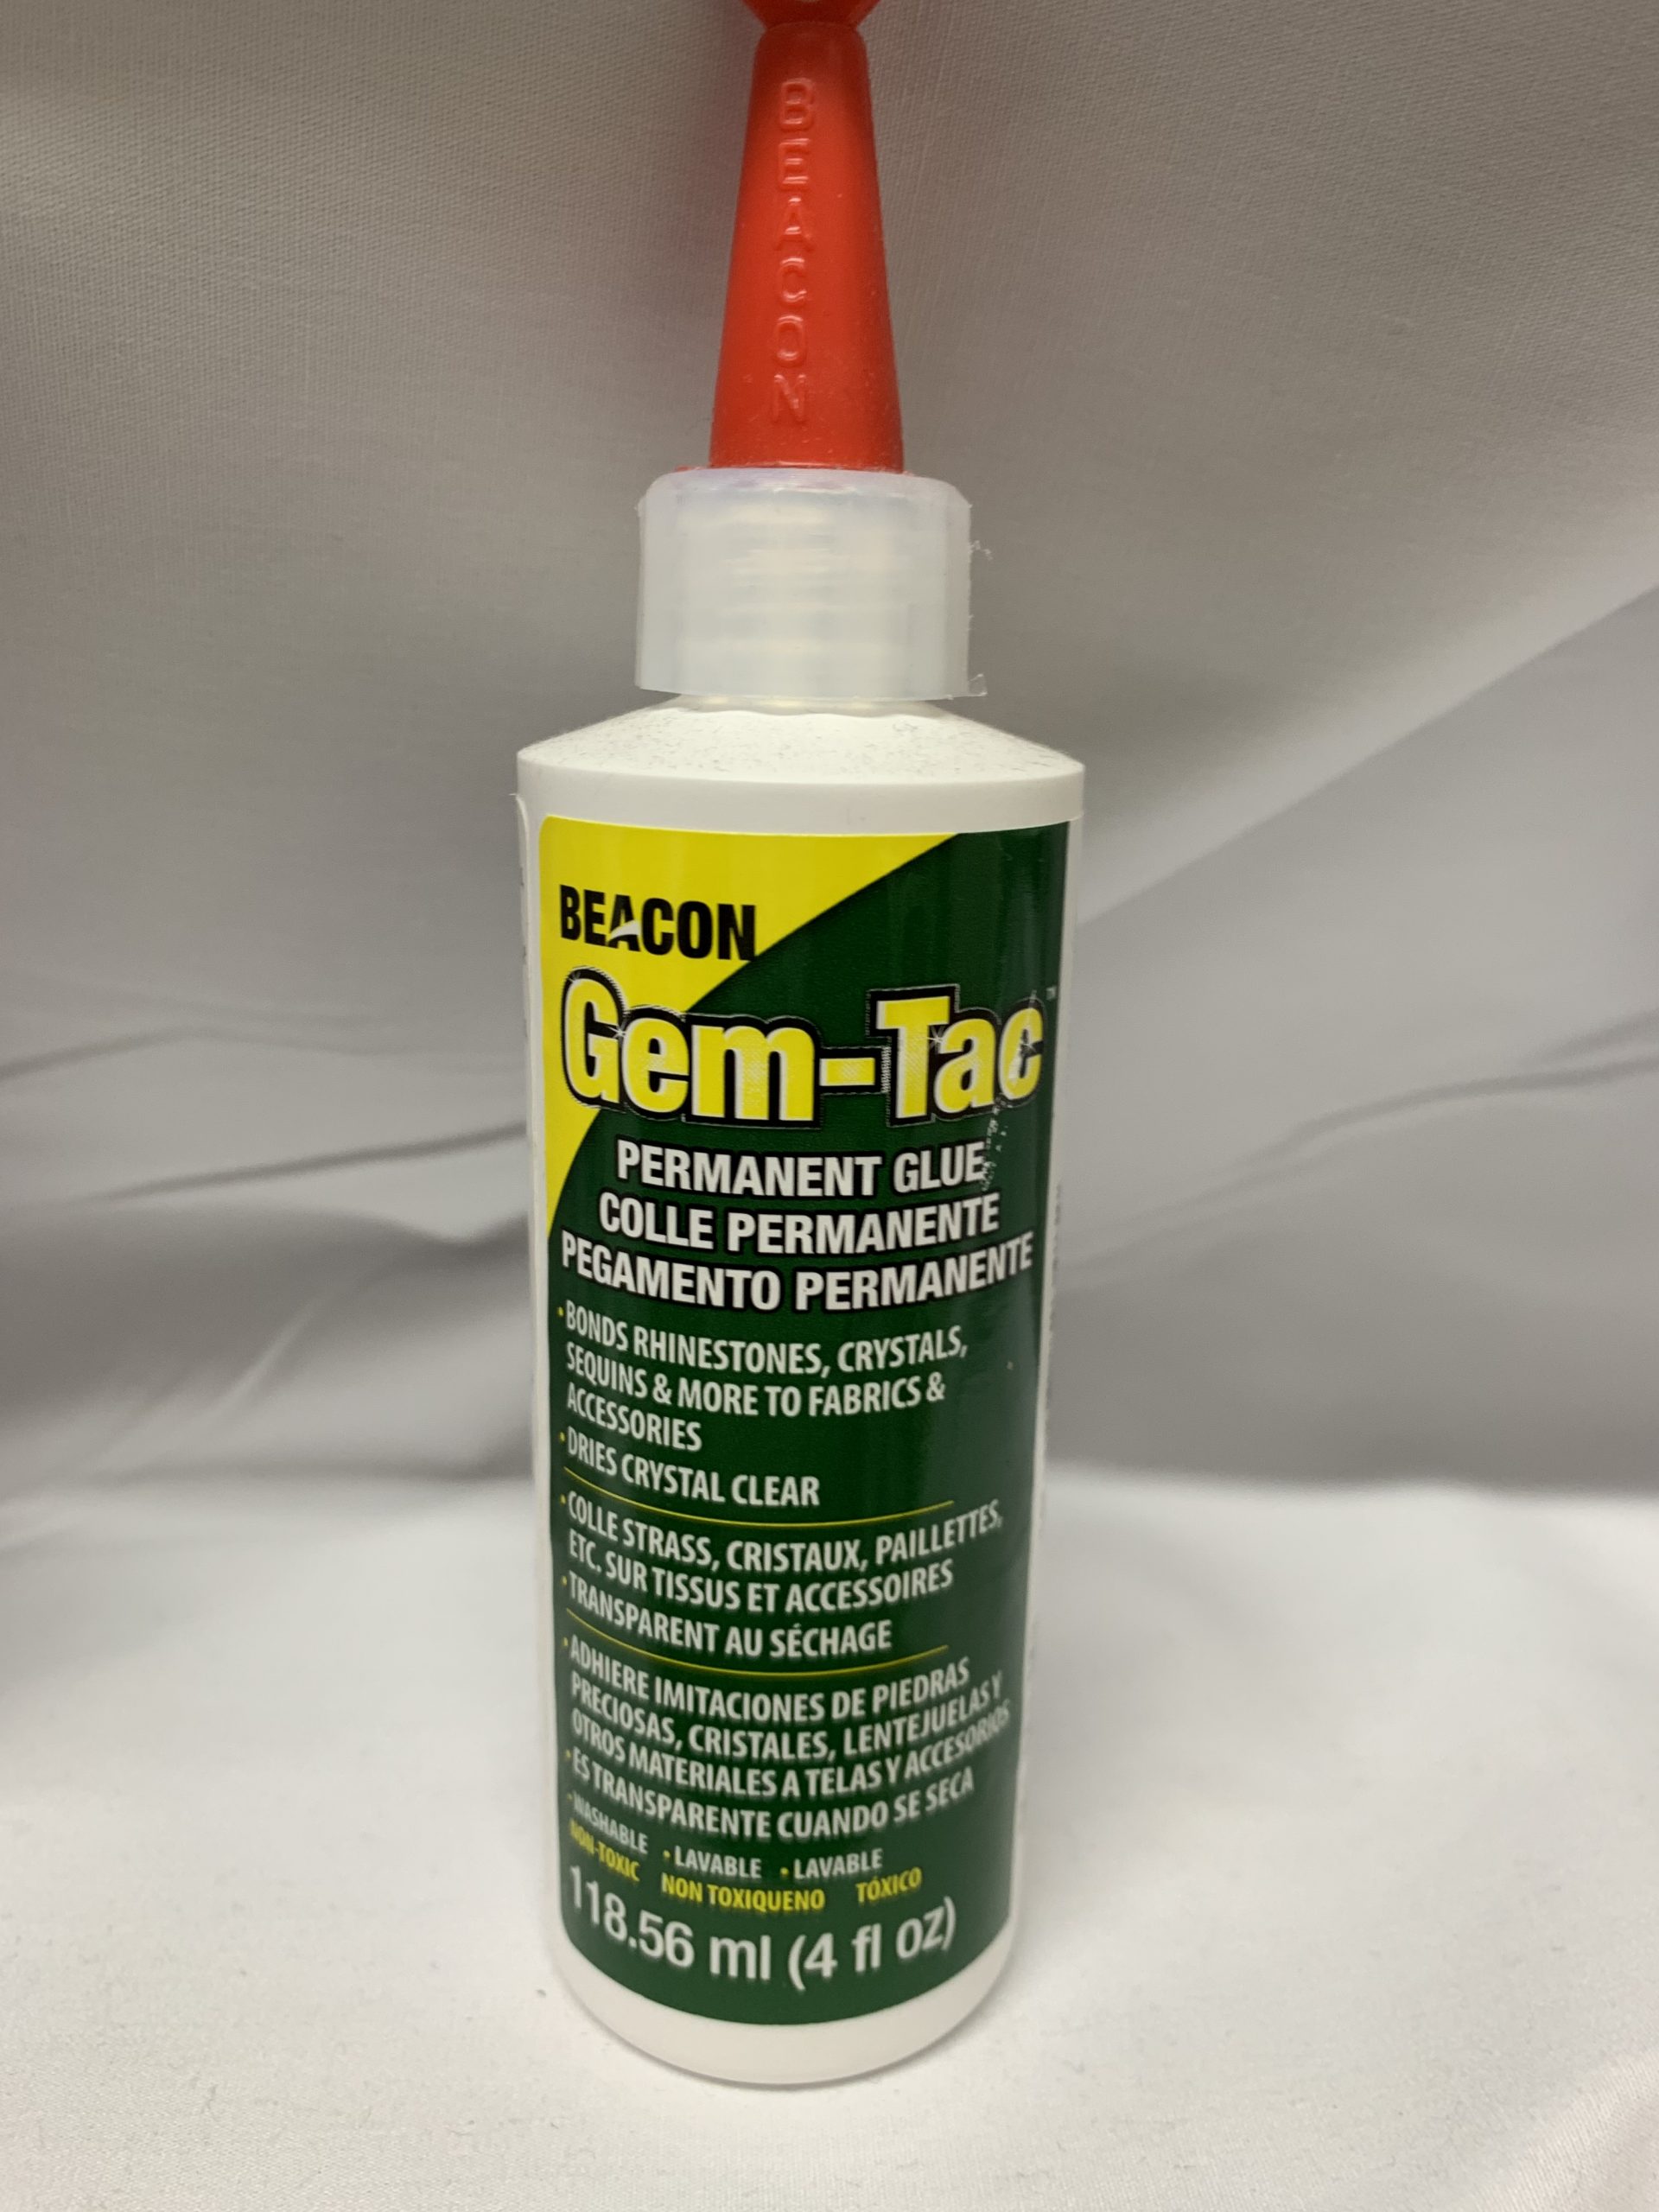 Beacon Gem-Tac permanent glue bonds rhinestones, crystals, sequins & more  to fabrics & accessories